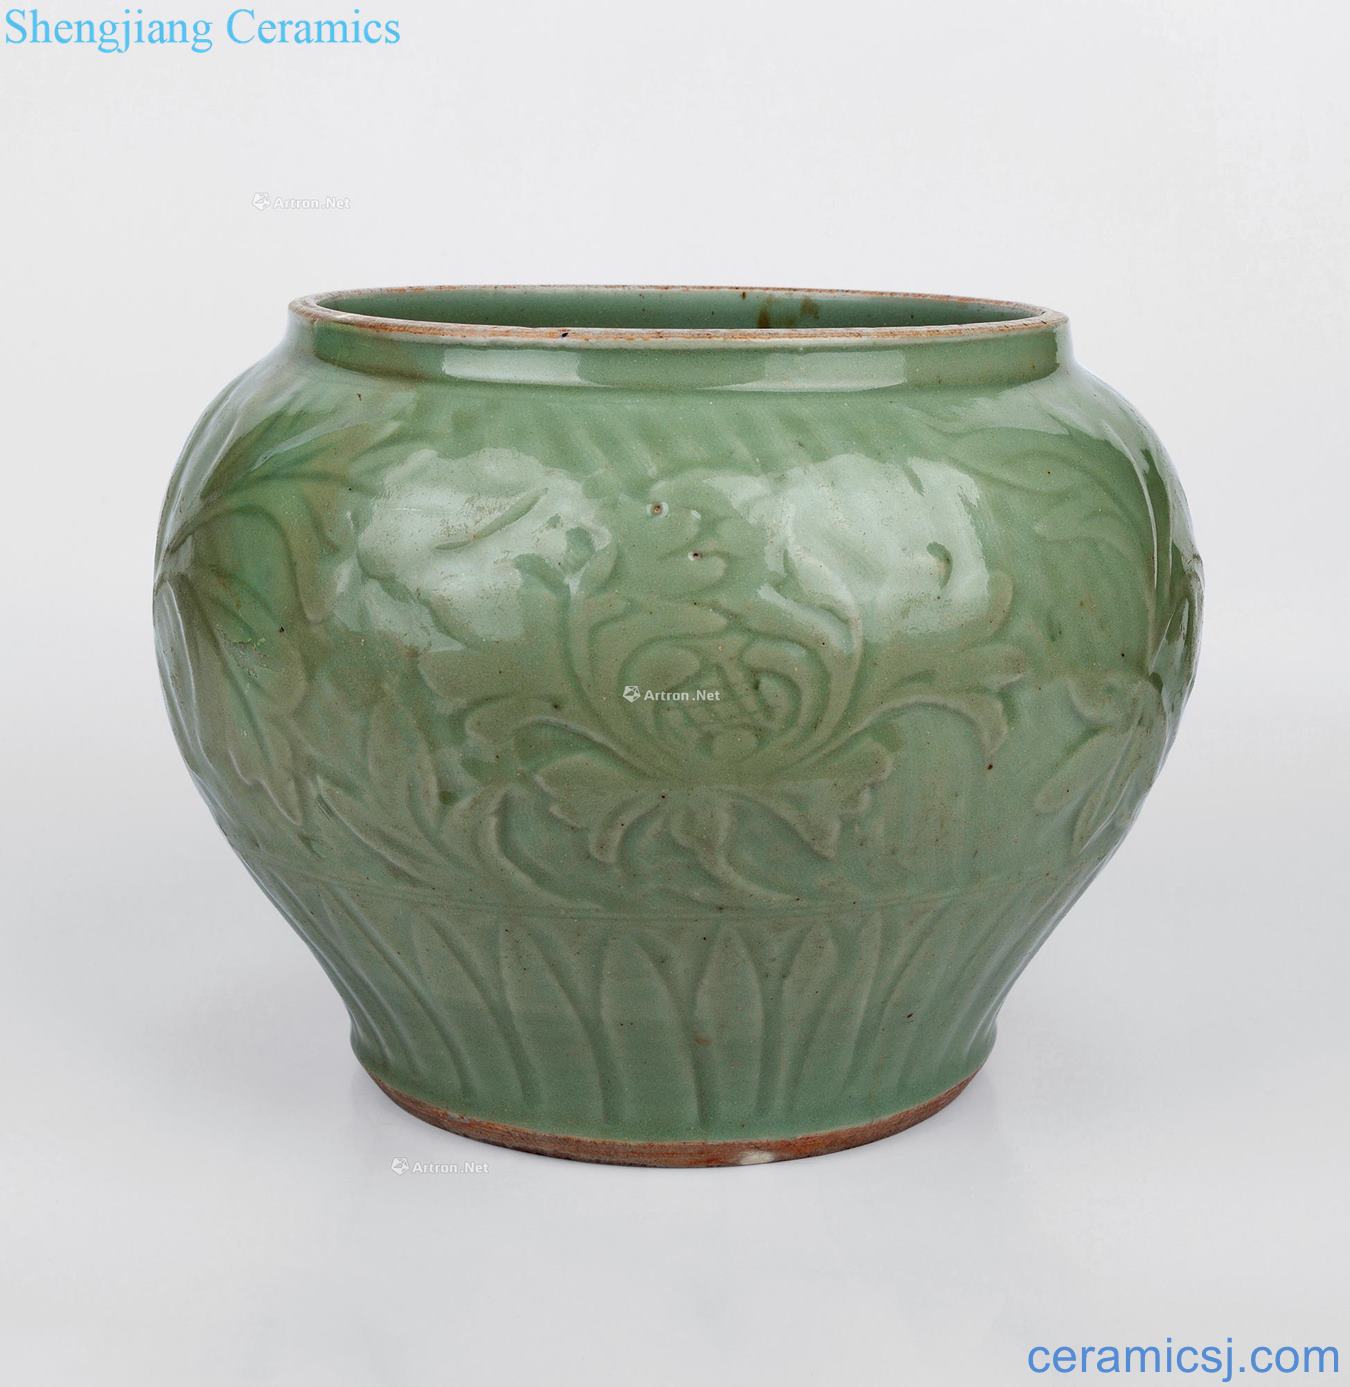 The yuan dynasty Longquan celadon glaze peony pattern tank